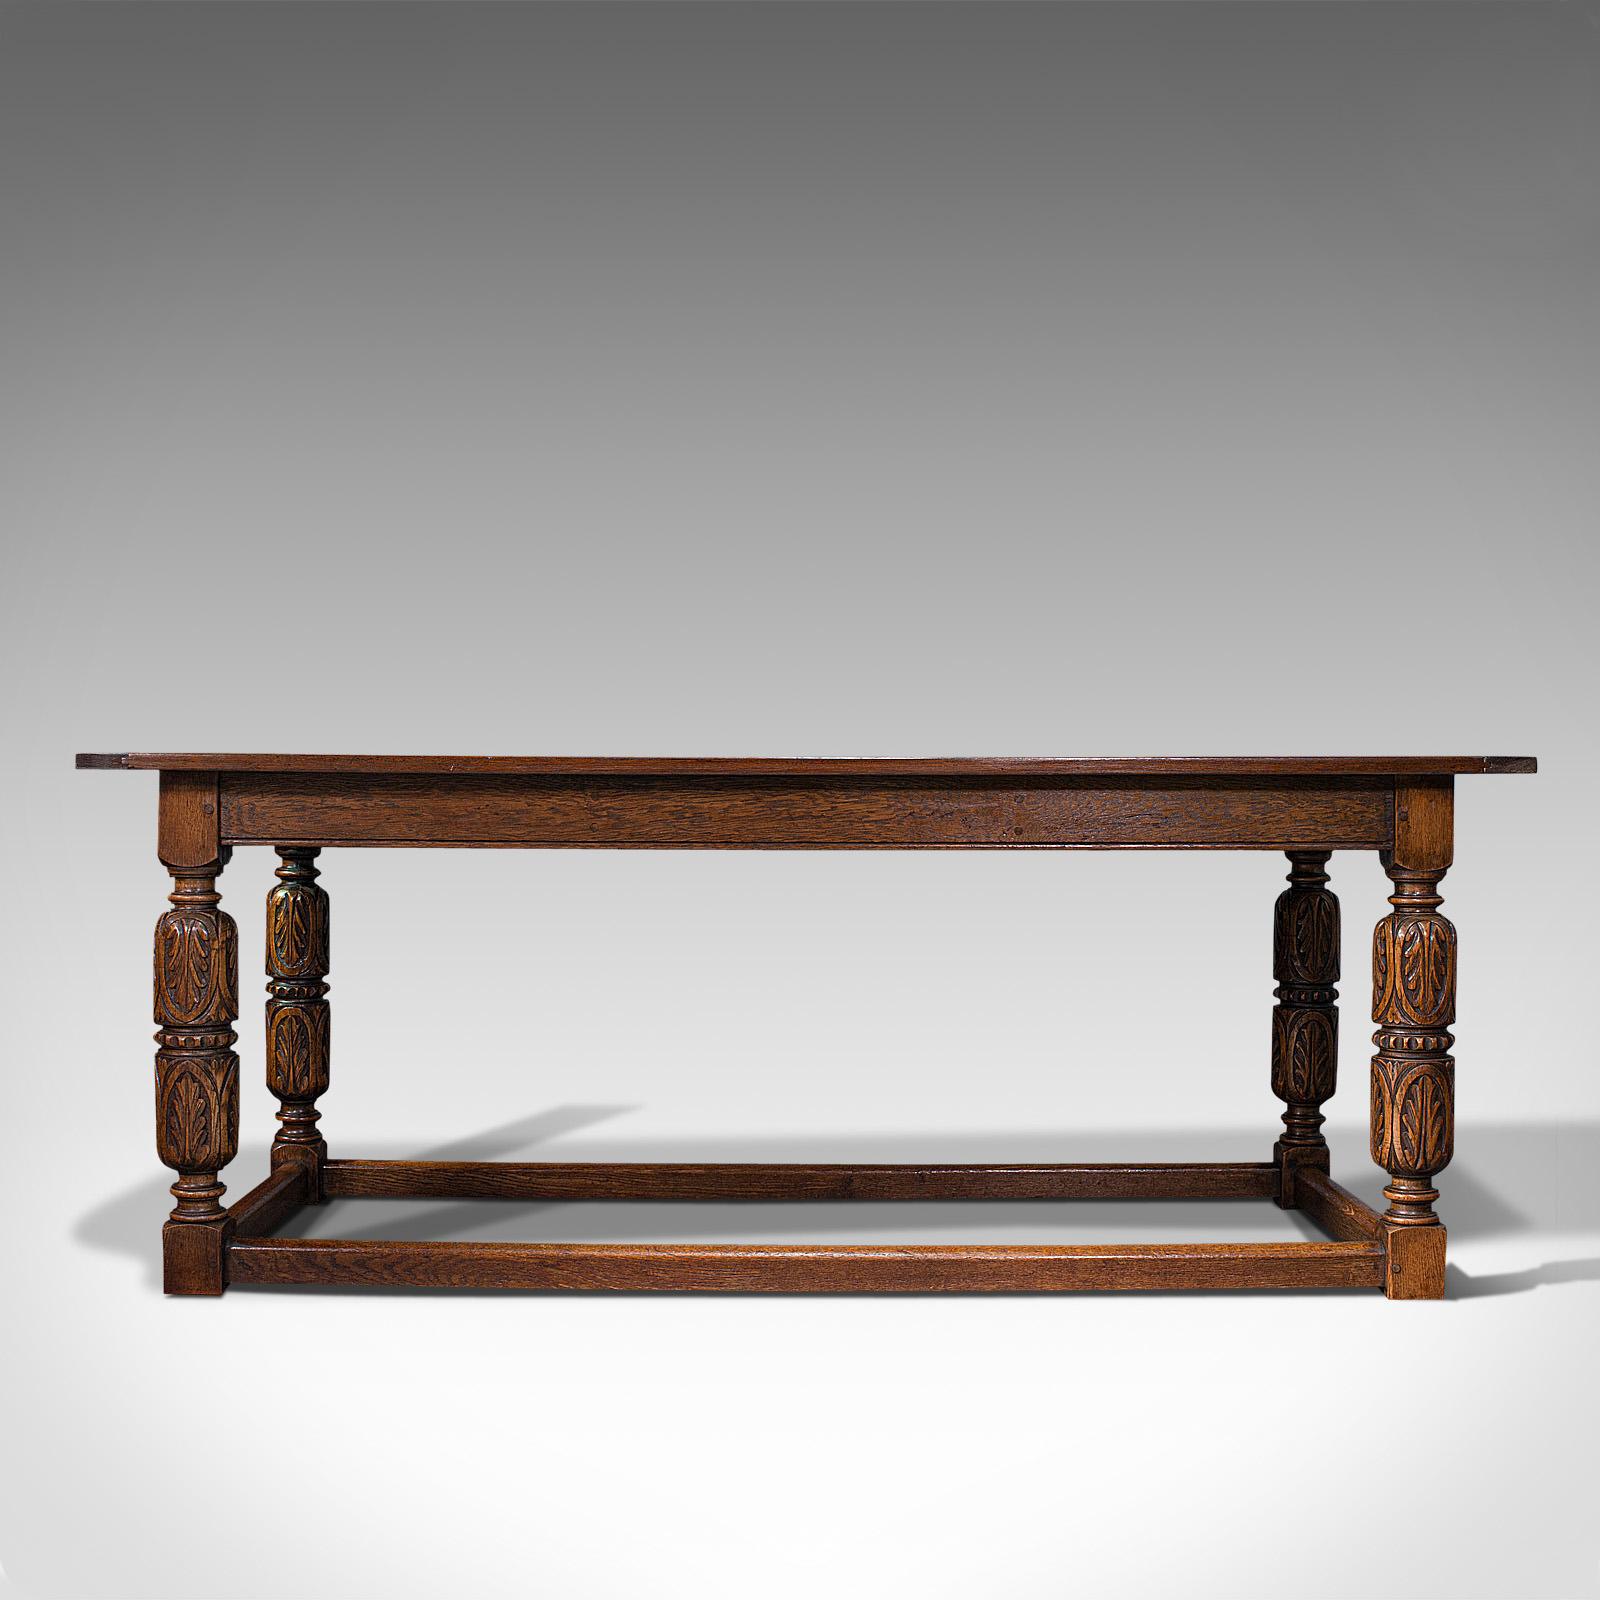 British Antique Refectory Table, English, Oak, Dining, Jacobean Revival, Edwardian, 1910